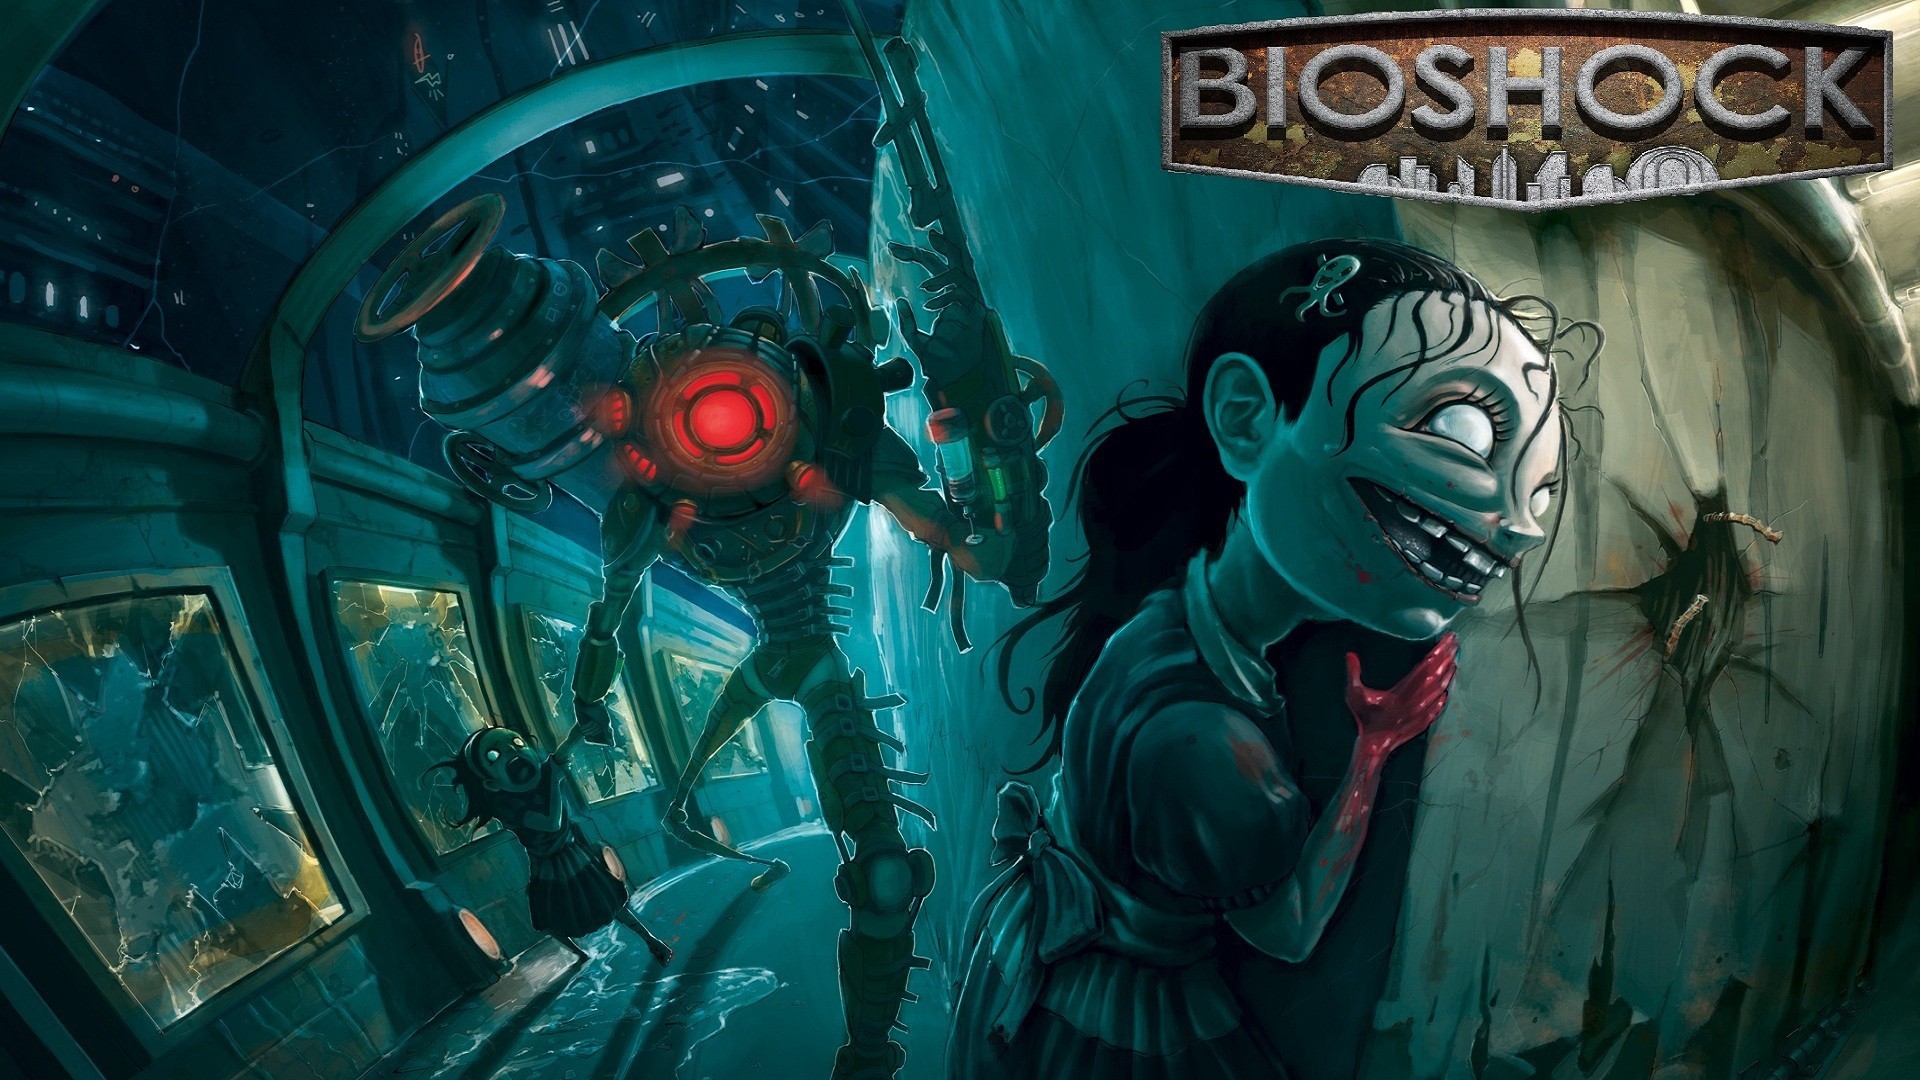 1920x1080 ... Bioshock - Big Daddy/Little Sister | Video games | Pinterest . ...